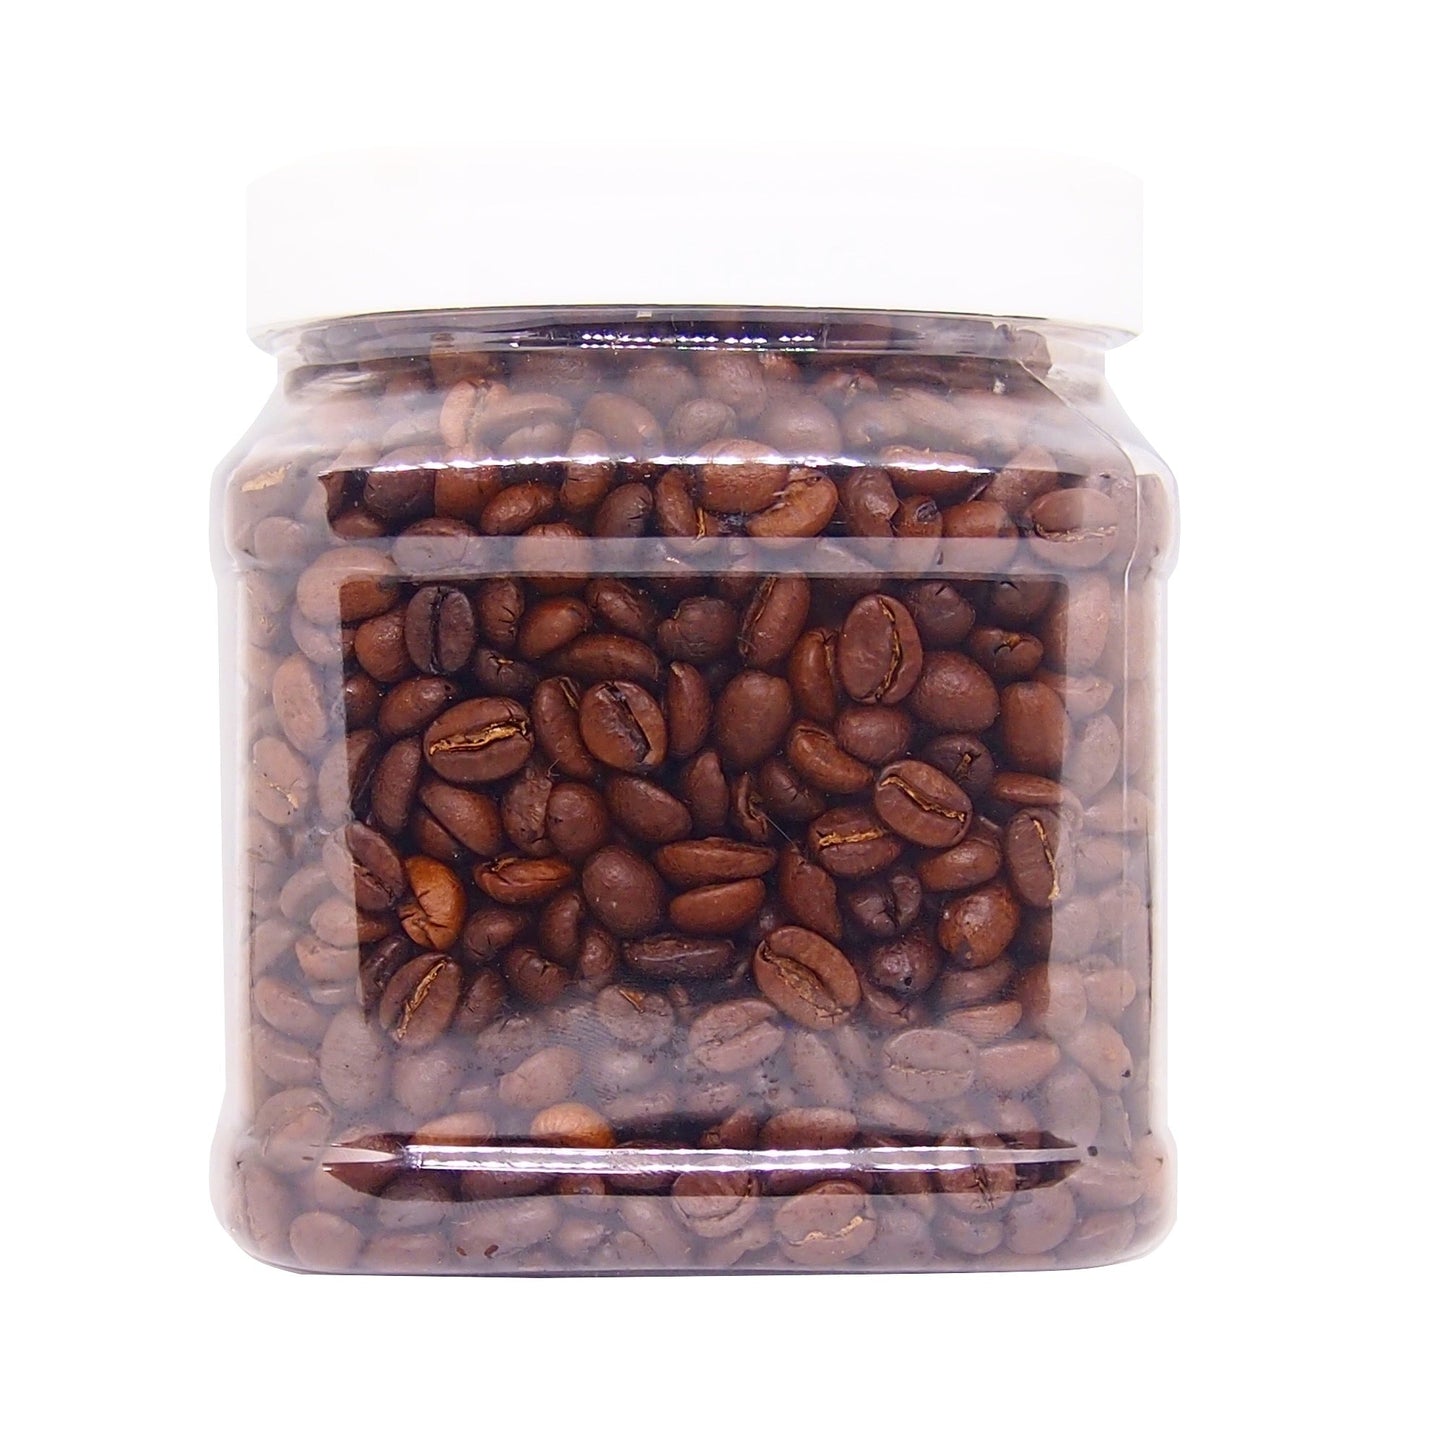 Roasted Arabica Coffee Beans 300g - Tassyam Organics